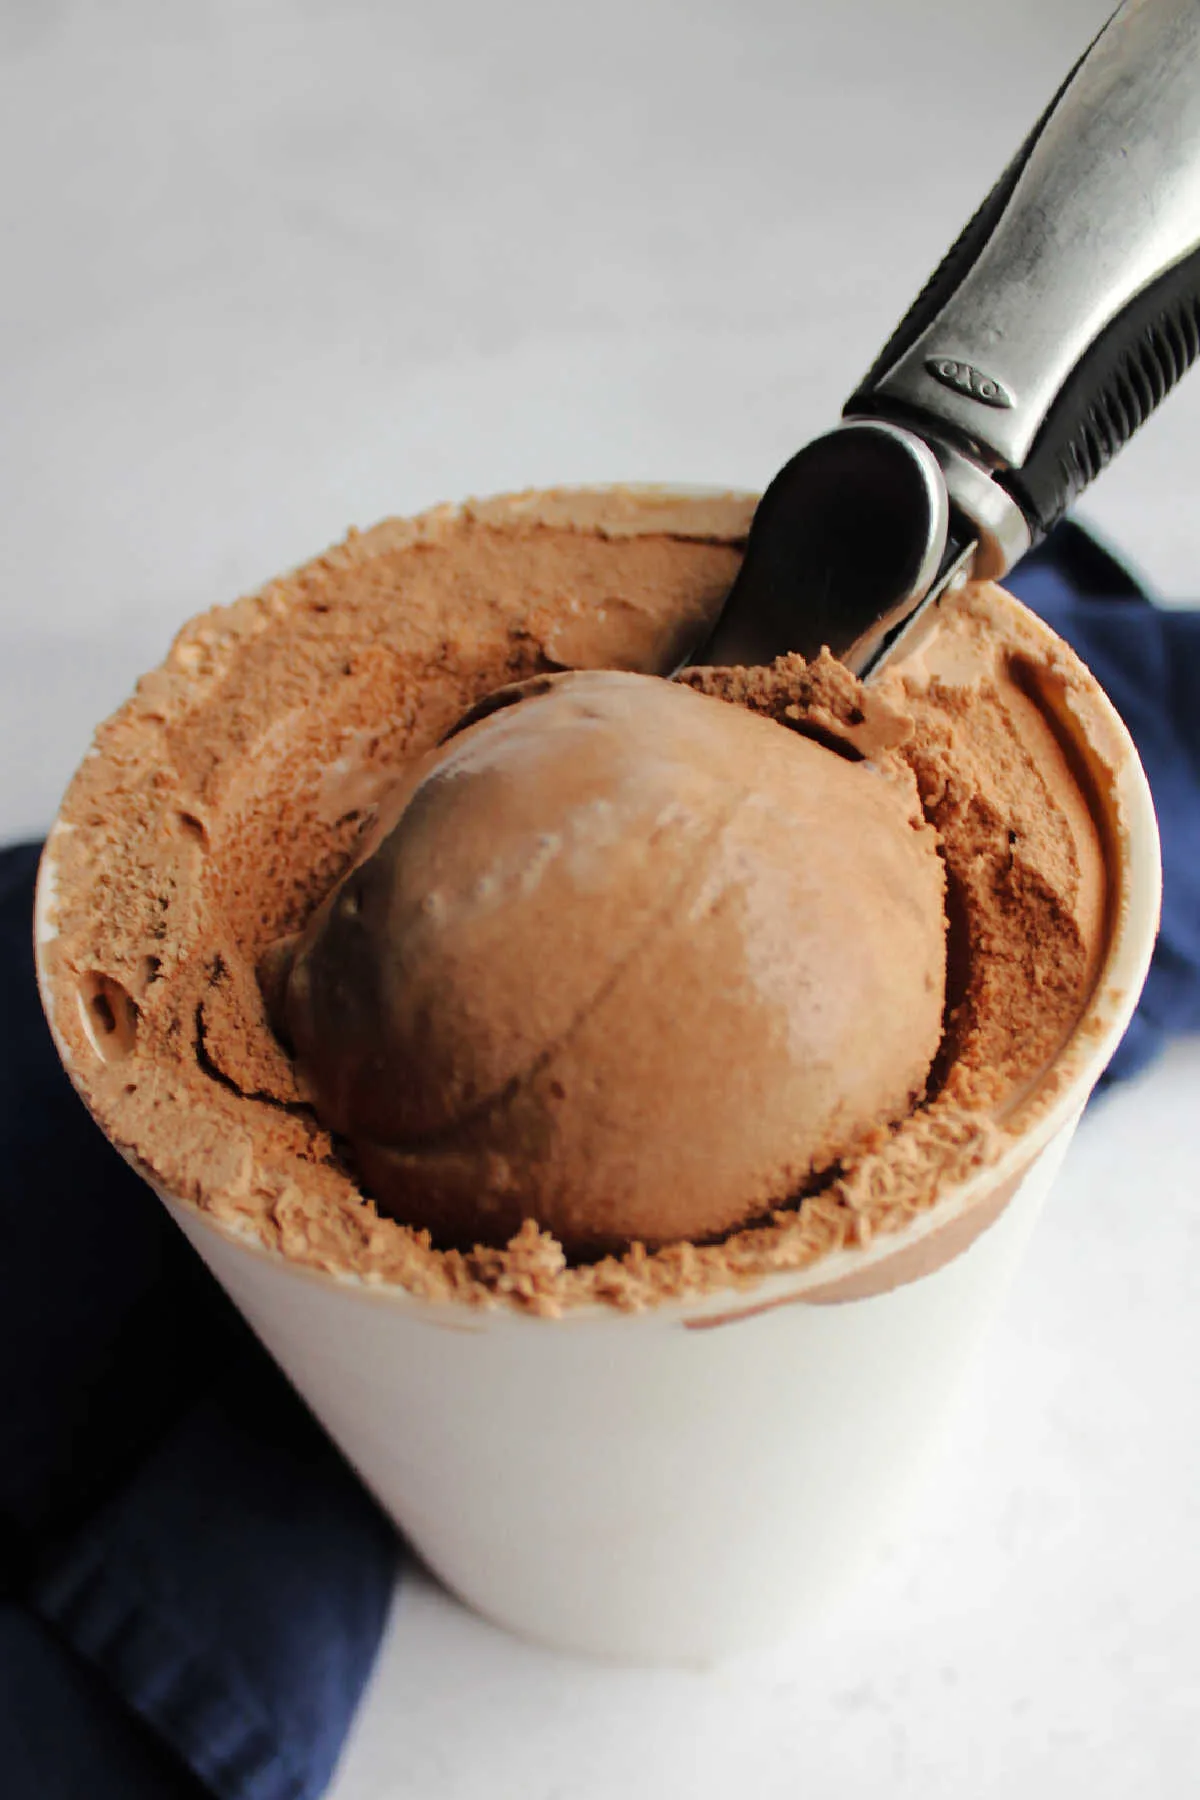 Using ice cream scoop to serve homemade chocolate ice cream.